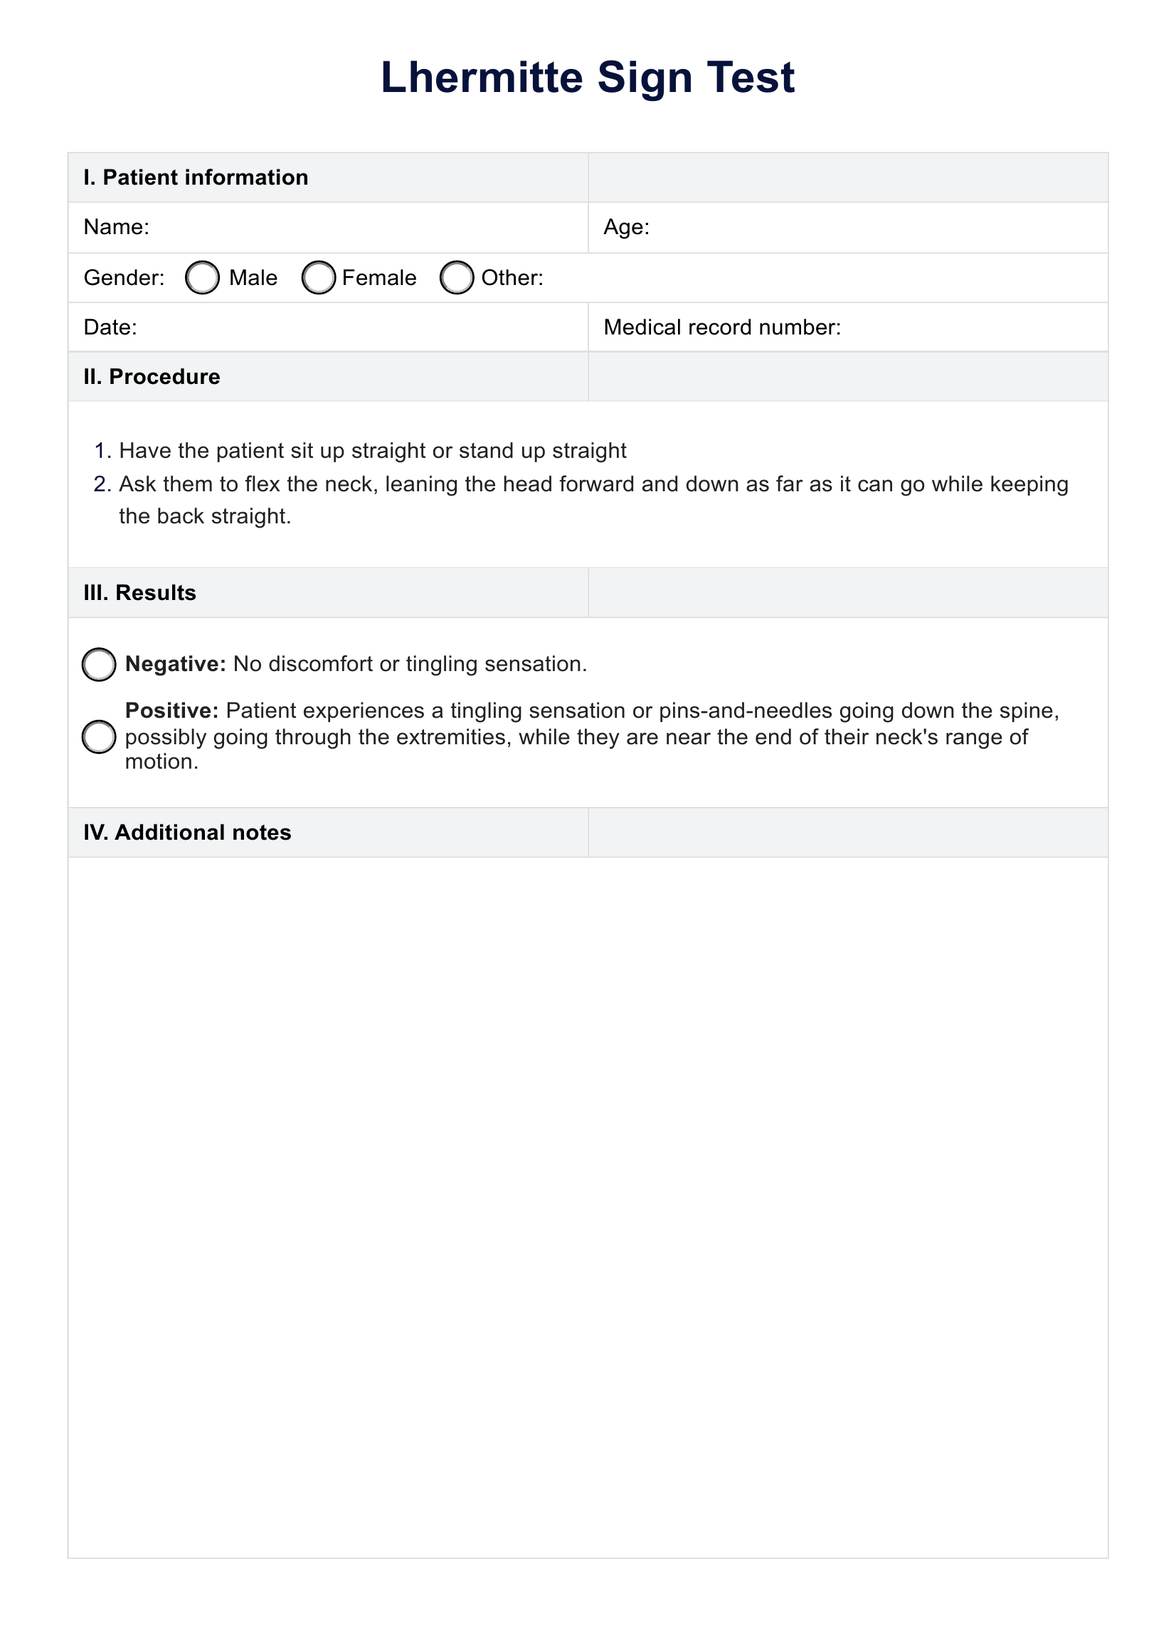 Lhermitte Sign Test PDF Example